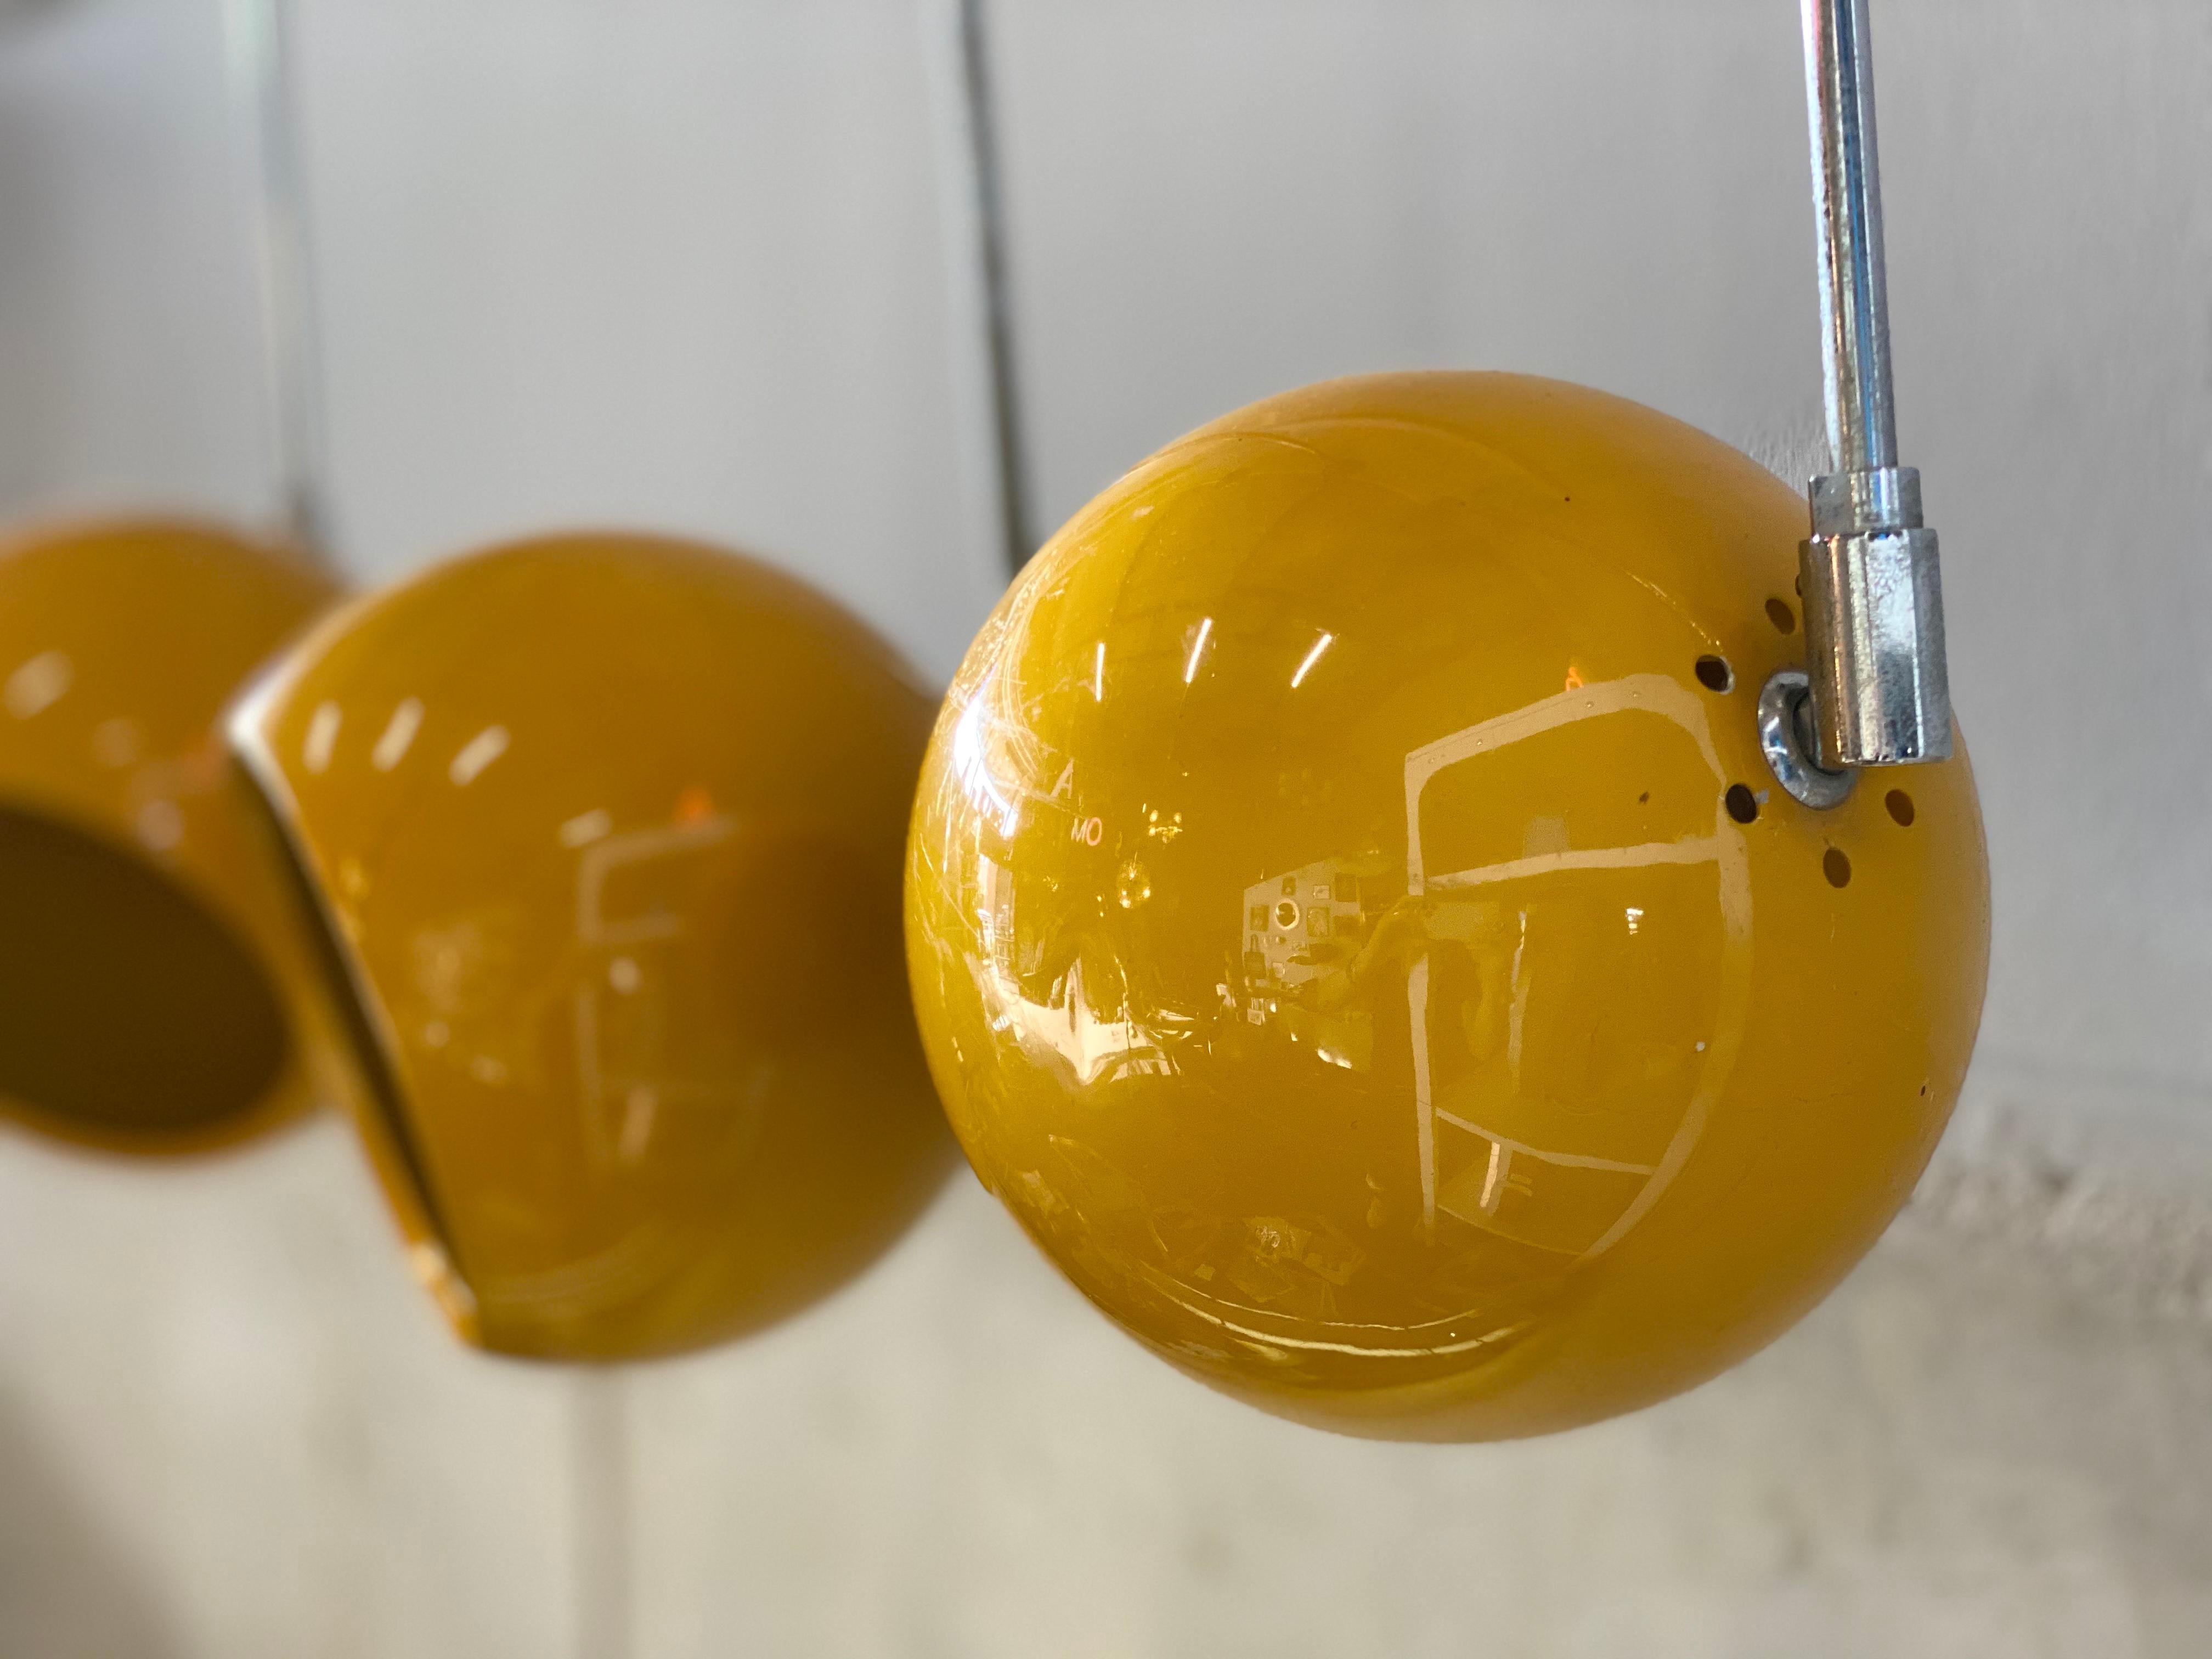 Set of Yellow Pendant Lamps / Spots, Space Age, 1970s Design, Panton Style 1